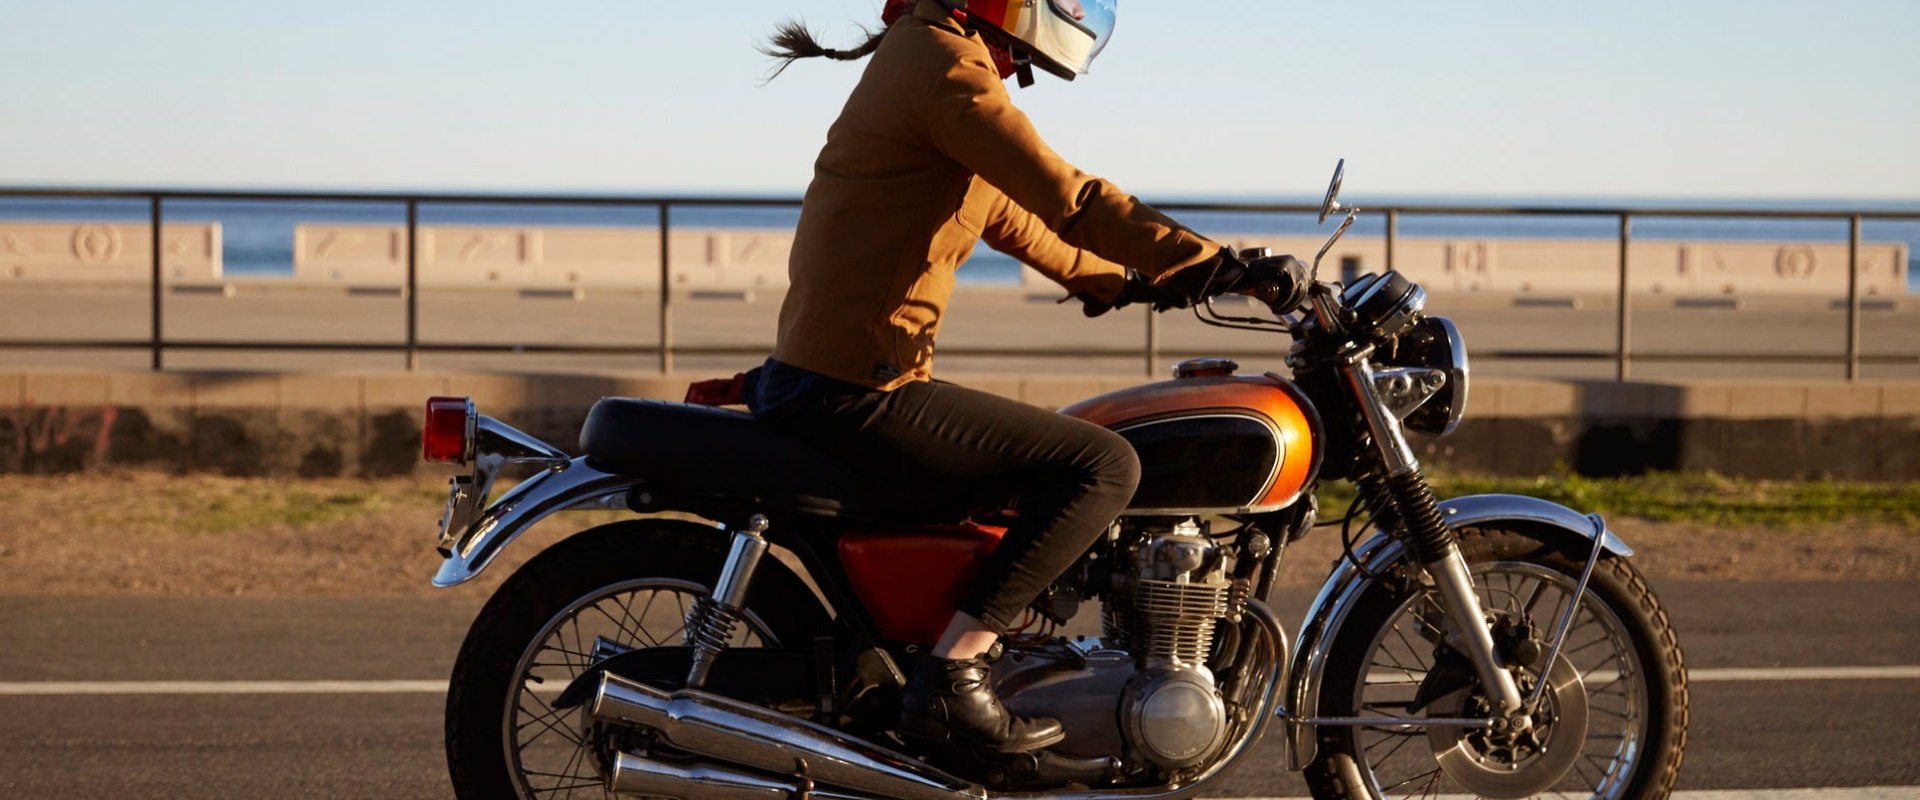 Is Progressive Motorcycle Insurance Worth It?